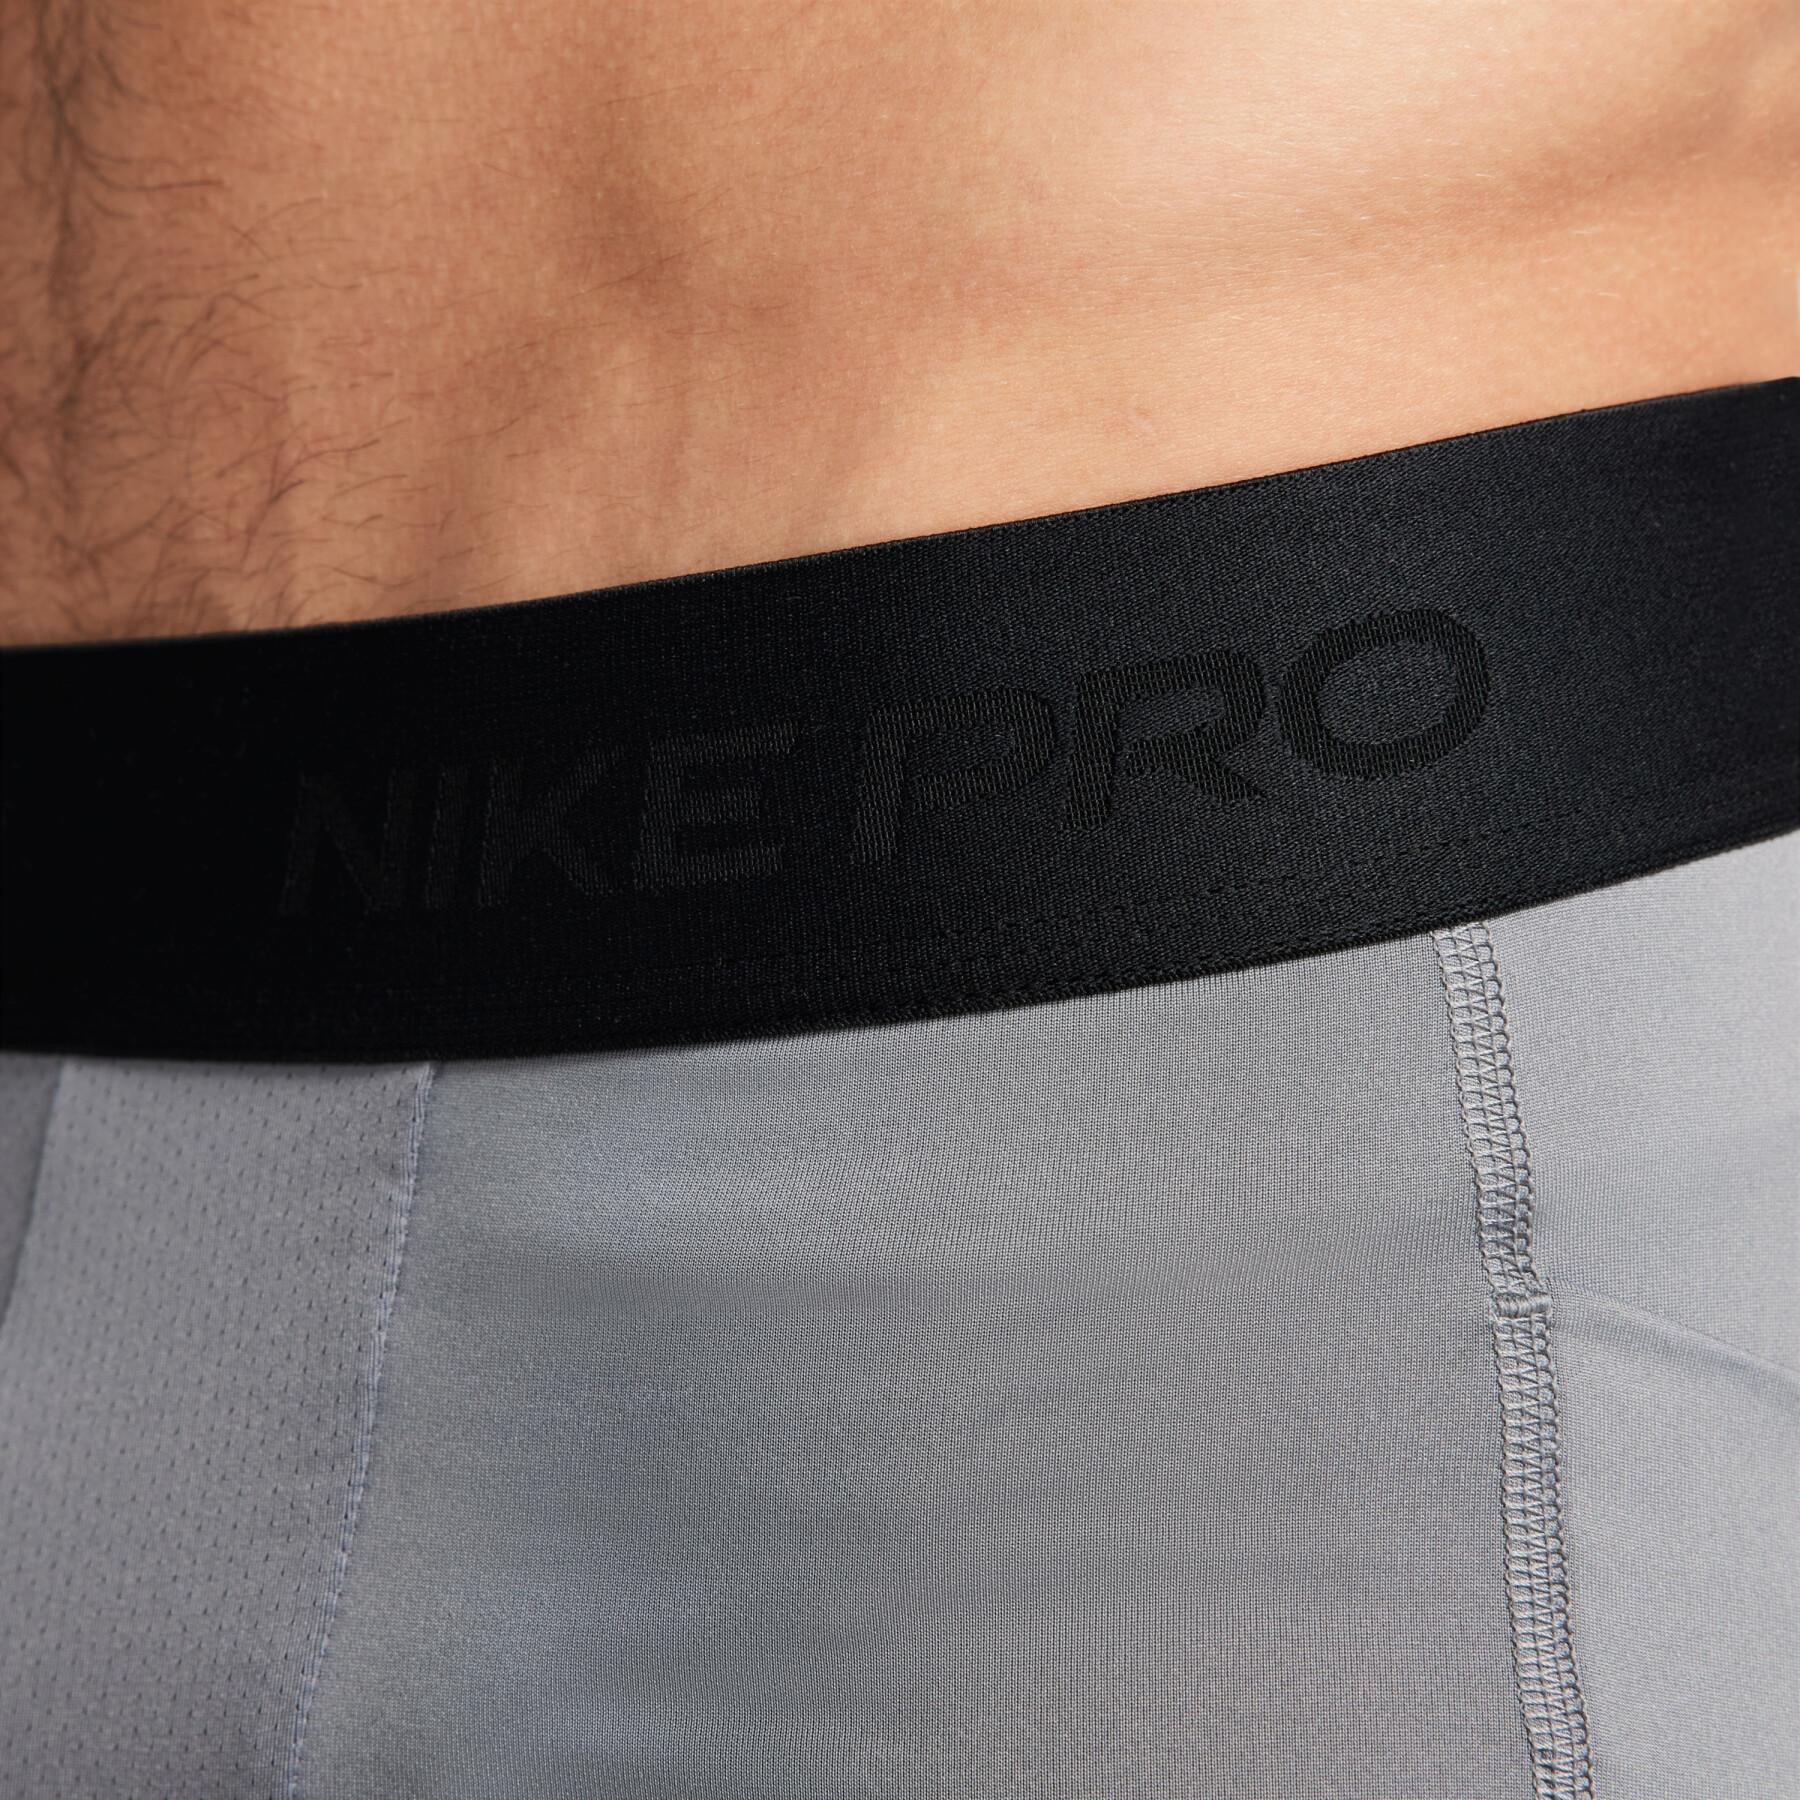 Pantalones cortos Nike Dri-FIT Brief